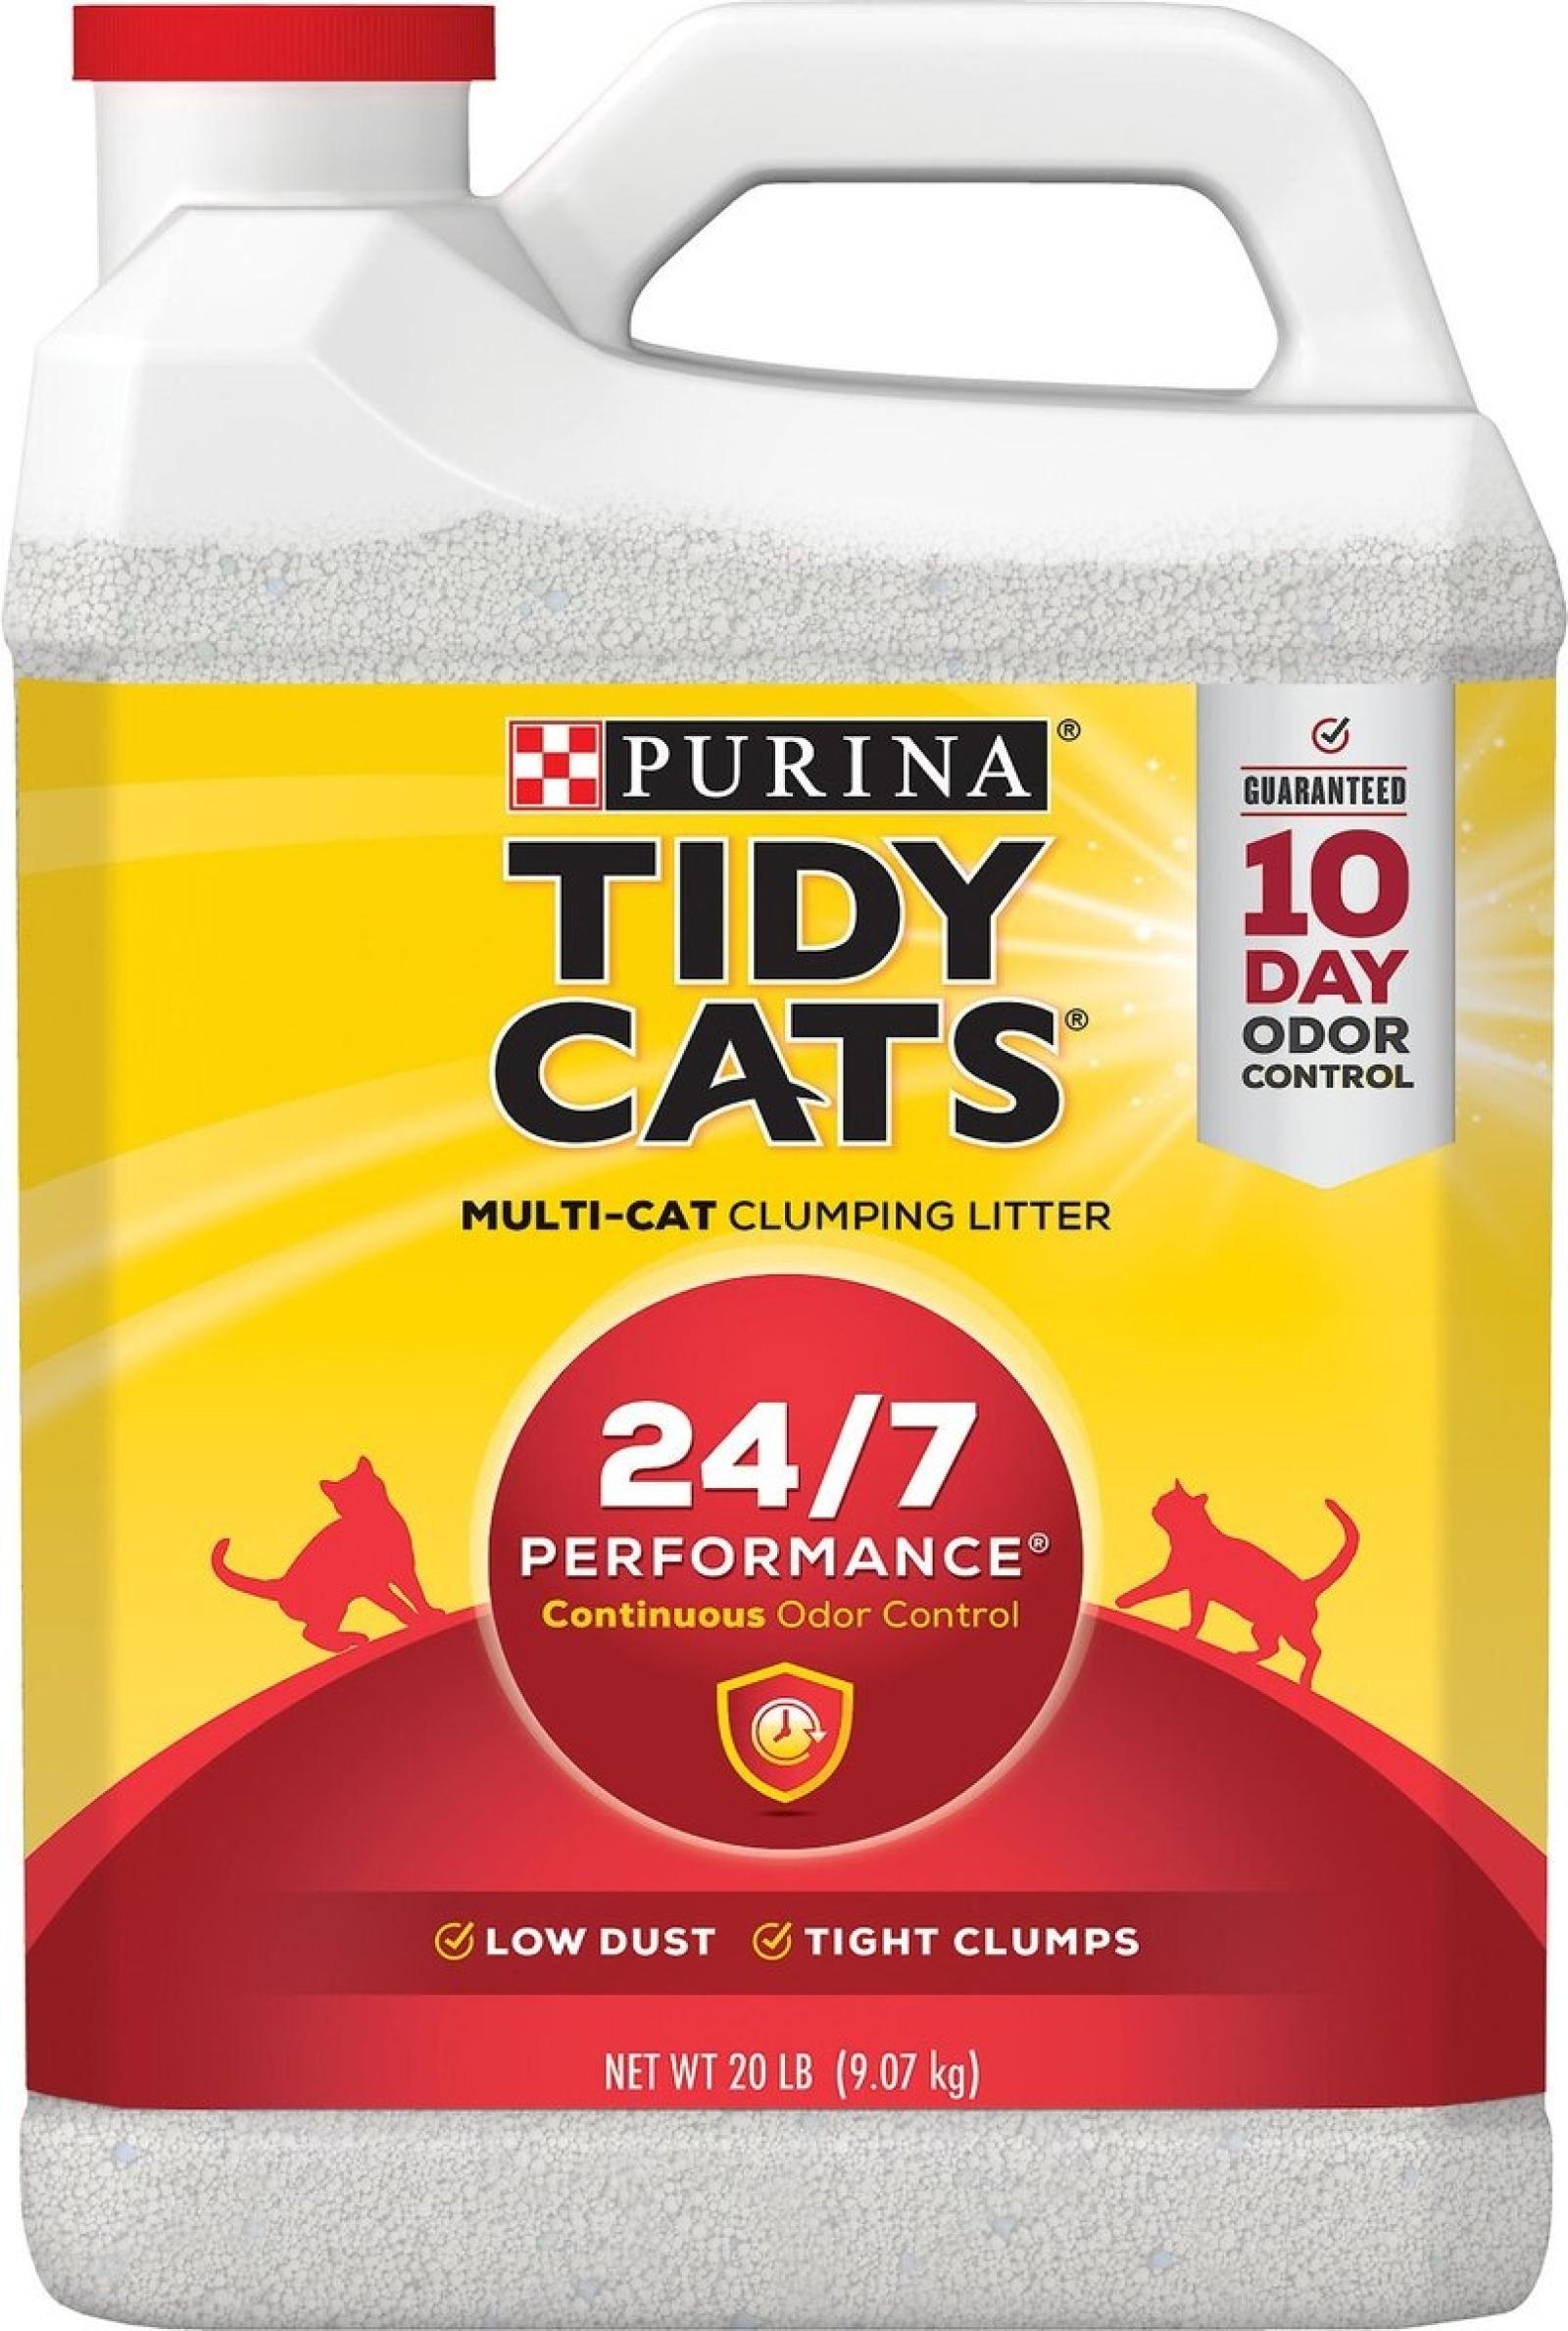 Purina Tidy Cats 24/7 Performance Multi Cat Clumping Cat Litter